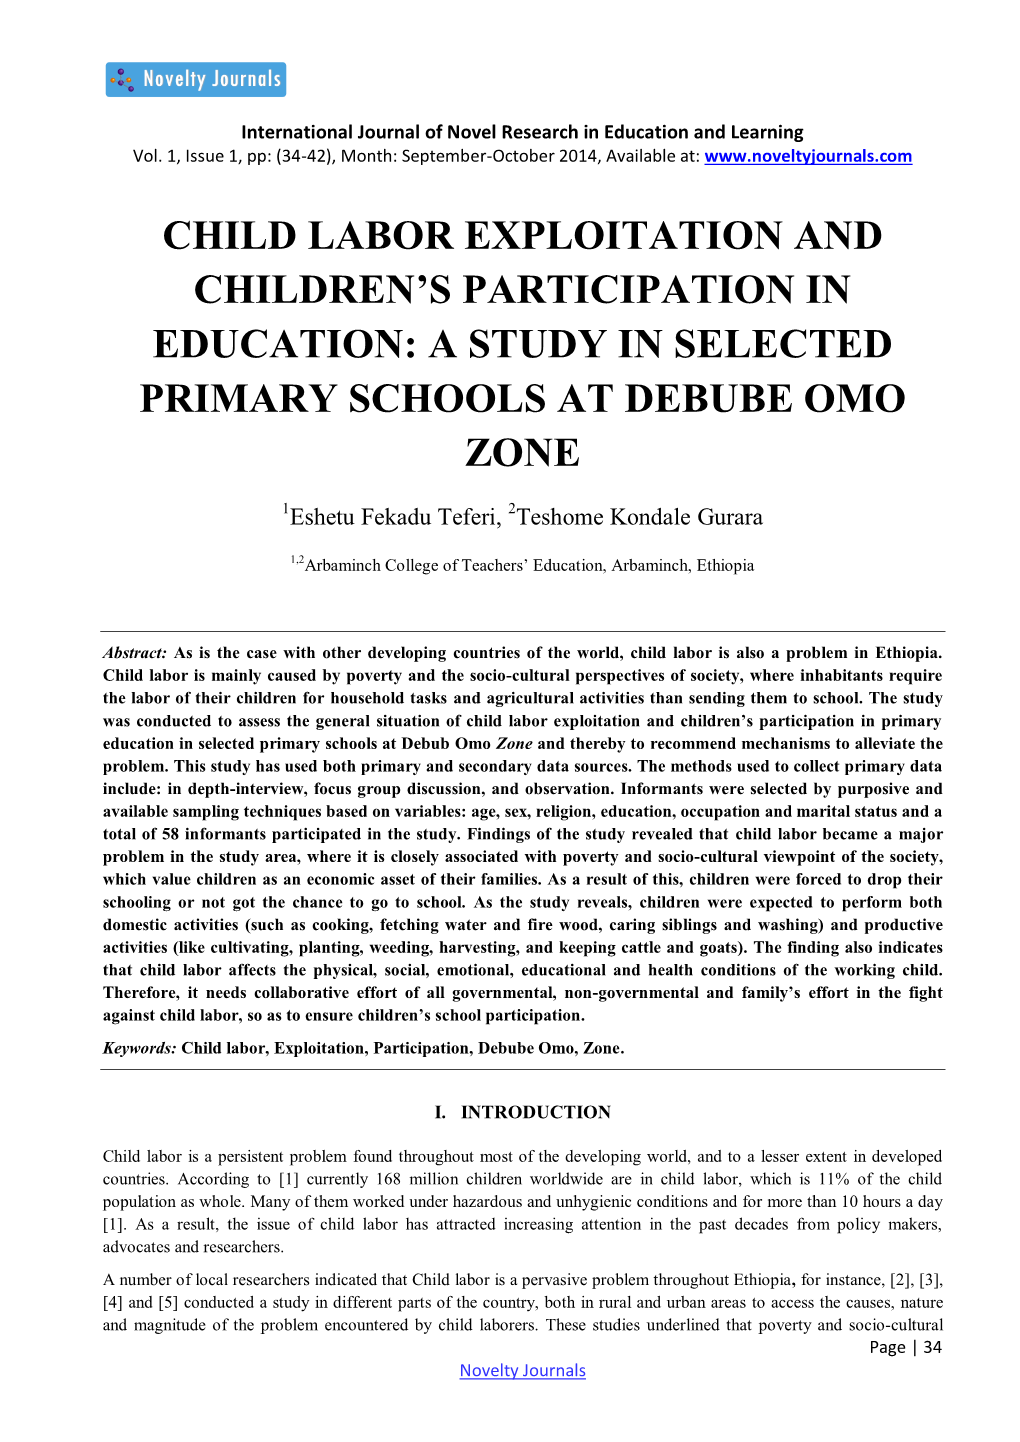 Child Labor Exploitation and Children's